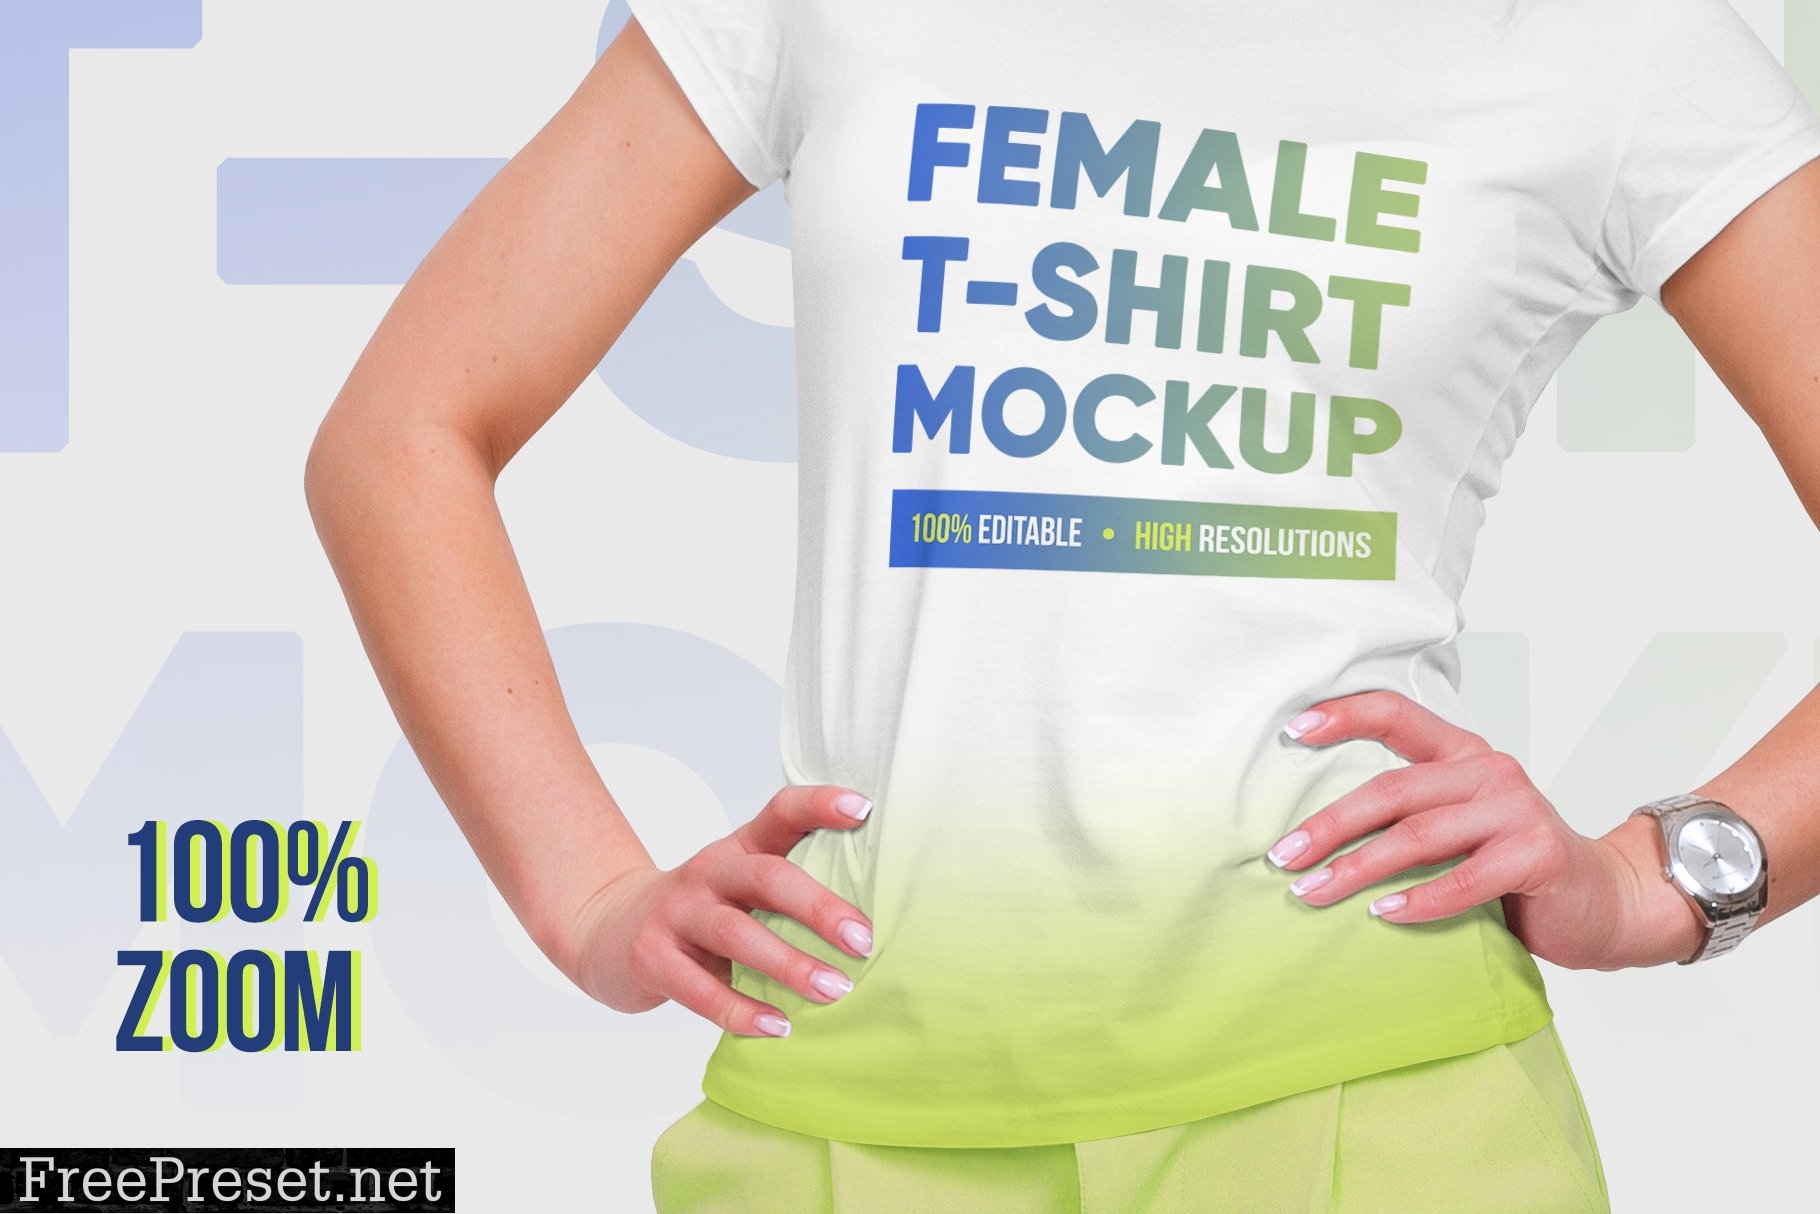 Female T-Shirt Mockups Vol 4 Part 2 5336778